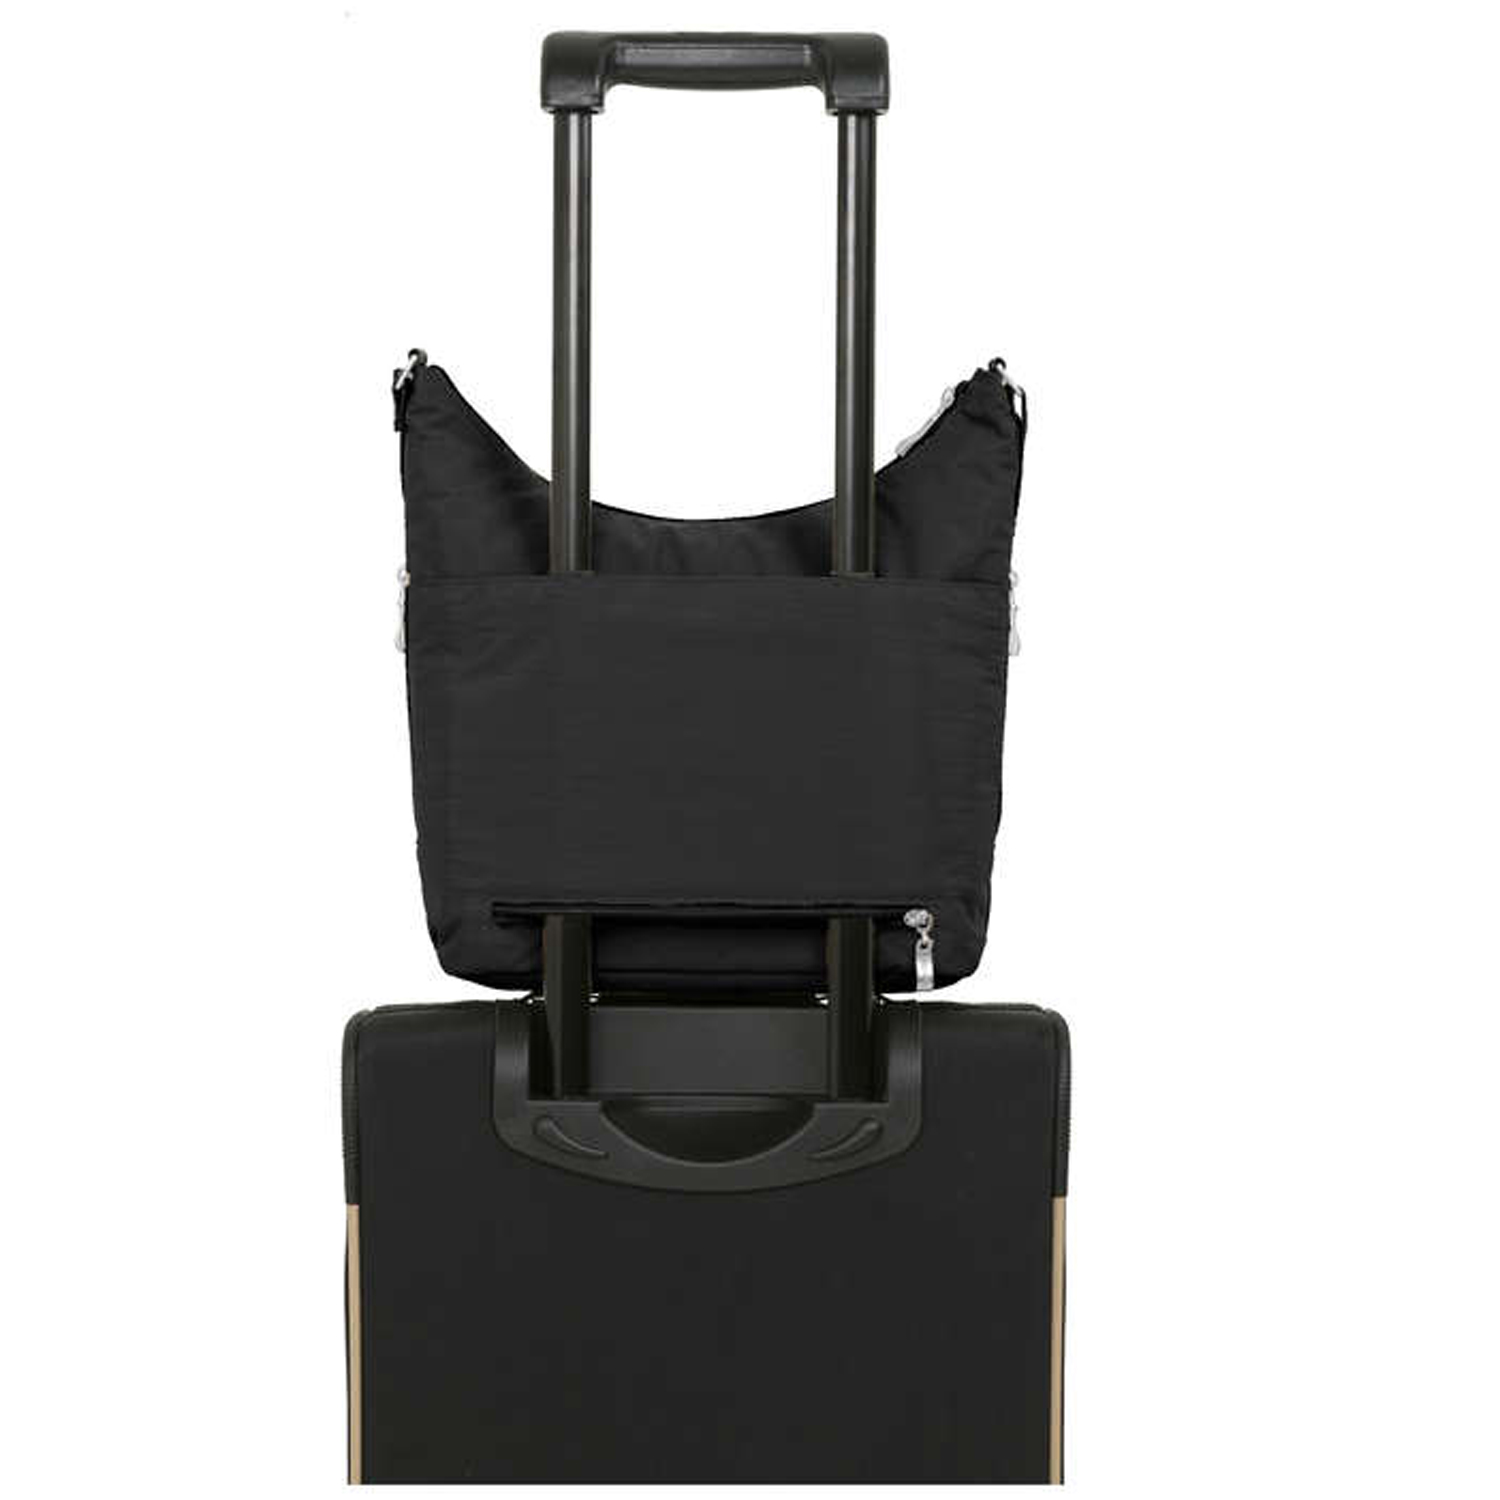 BAGGALLINI HOBO Cargo Crossbody Shoulder Bag Gray/Blue Nylon New NWT $78